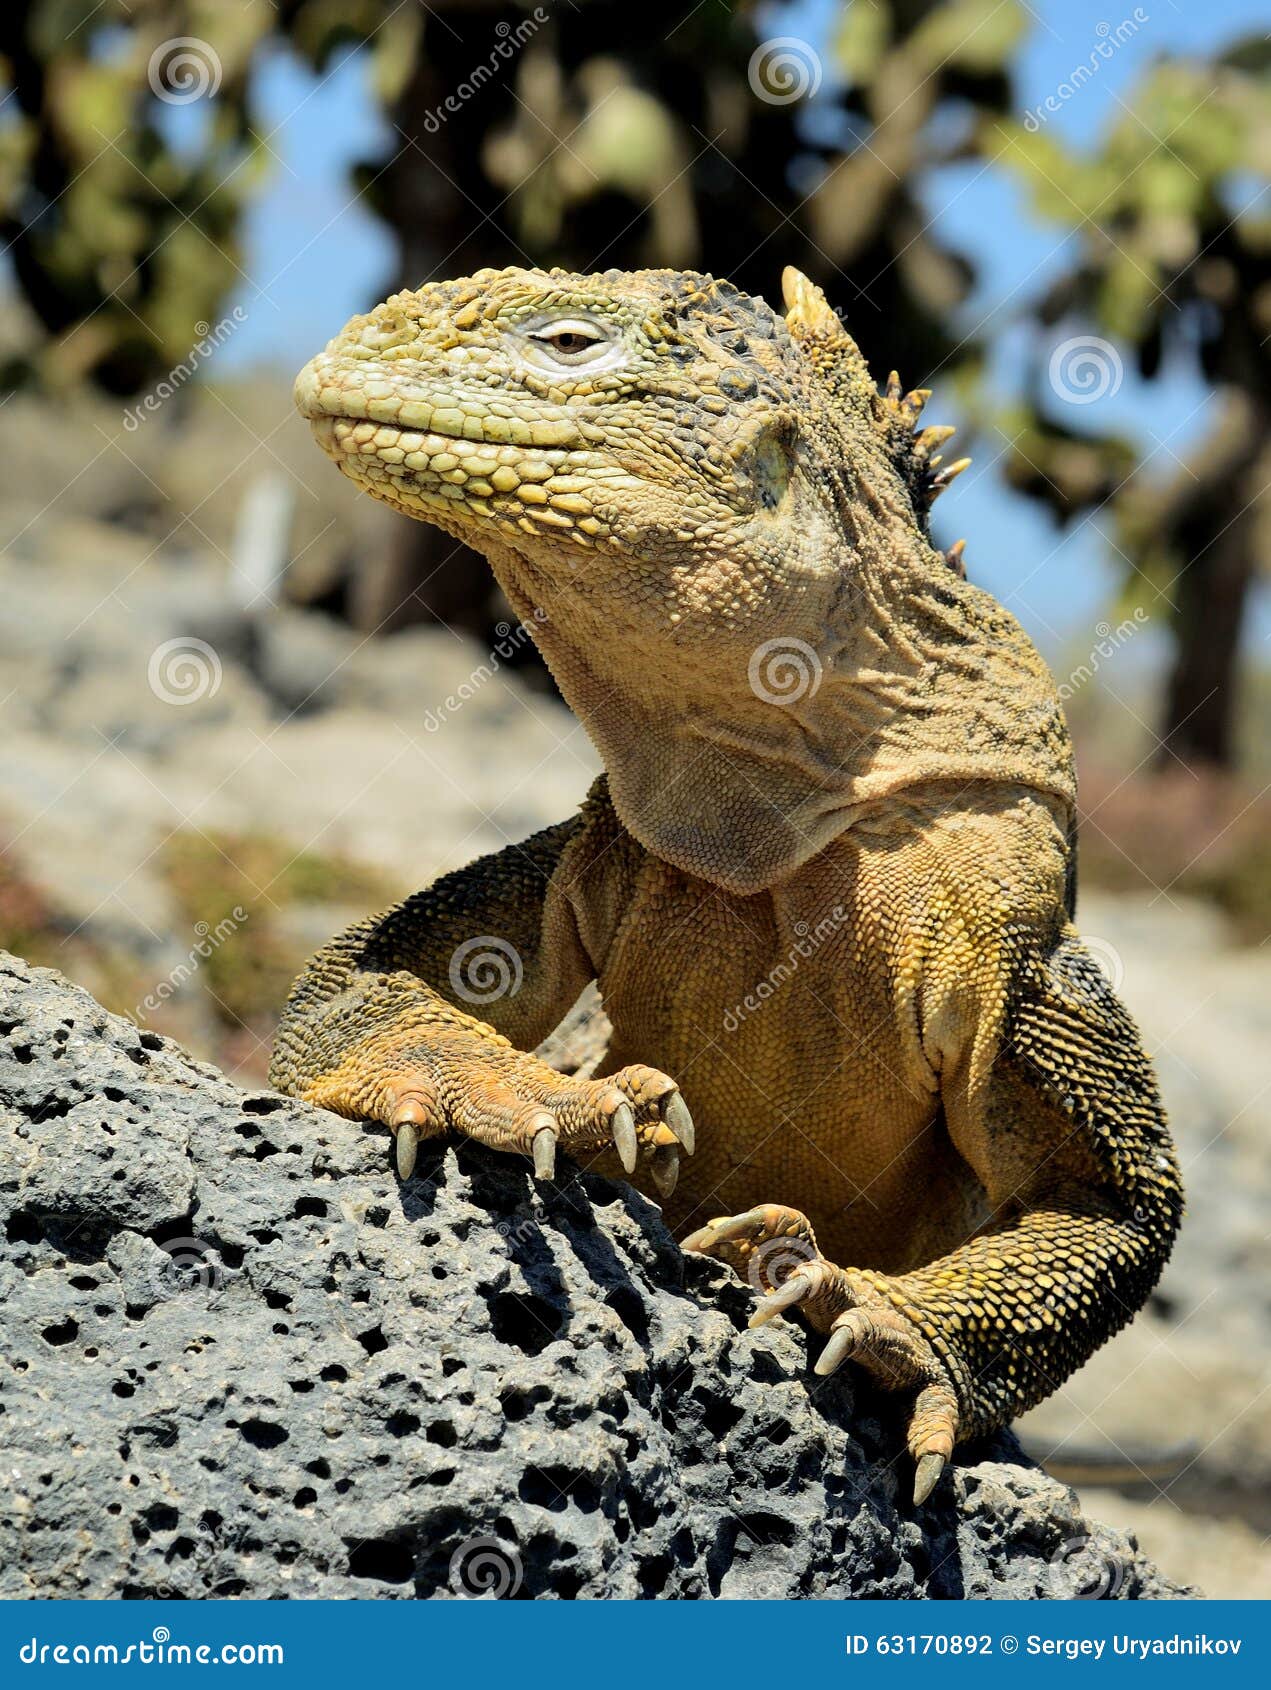 galapagos land iguana ( conolophus subcristatus ),